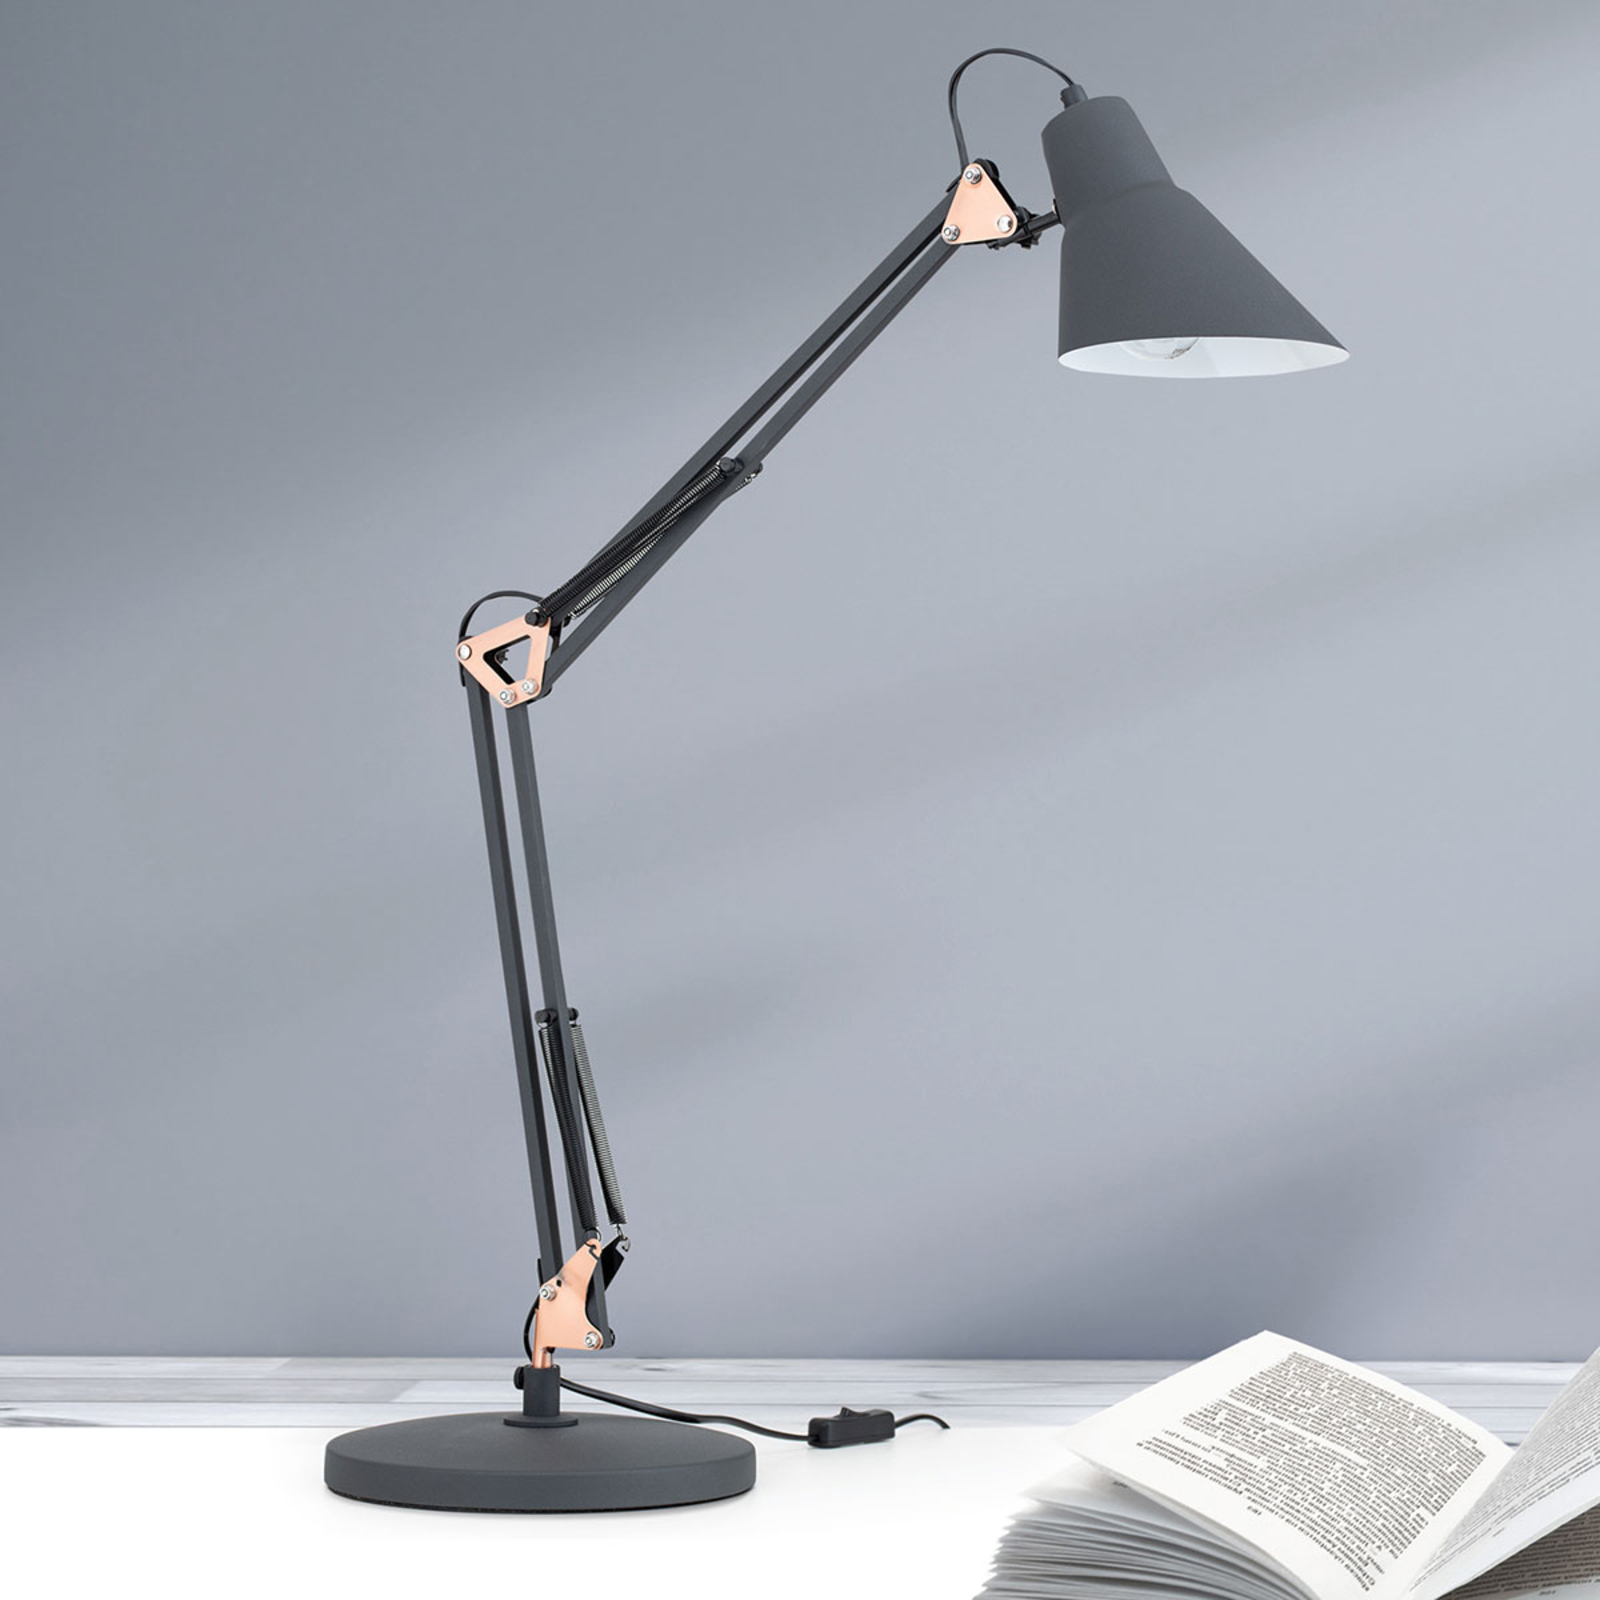 Bachelor table lamp, adjustable in three ways